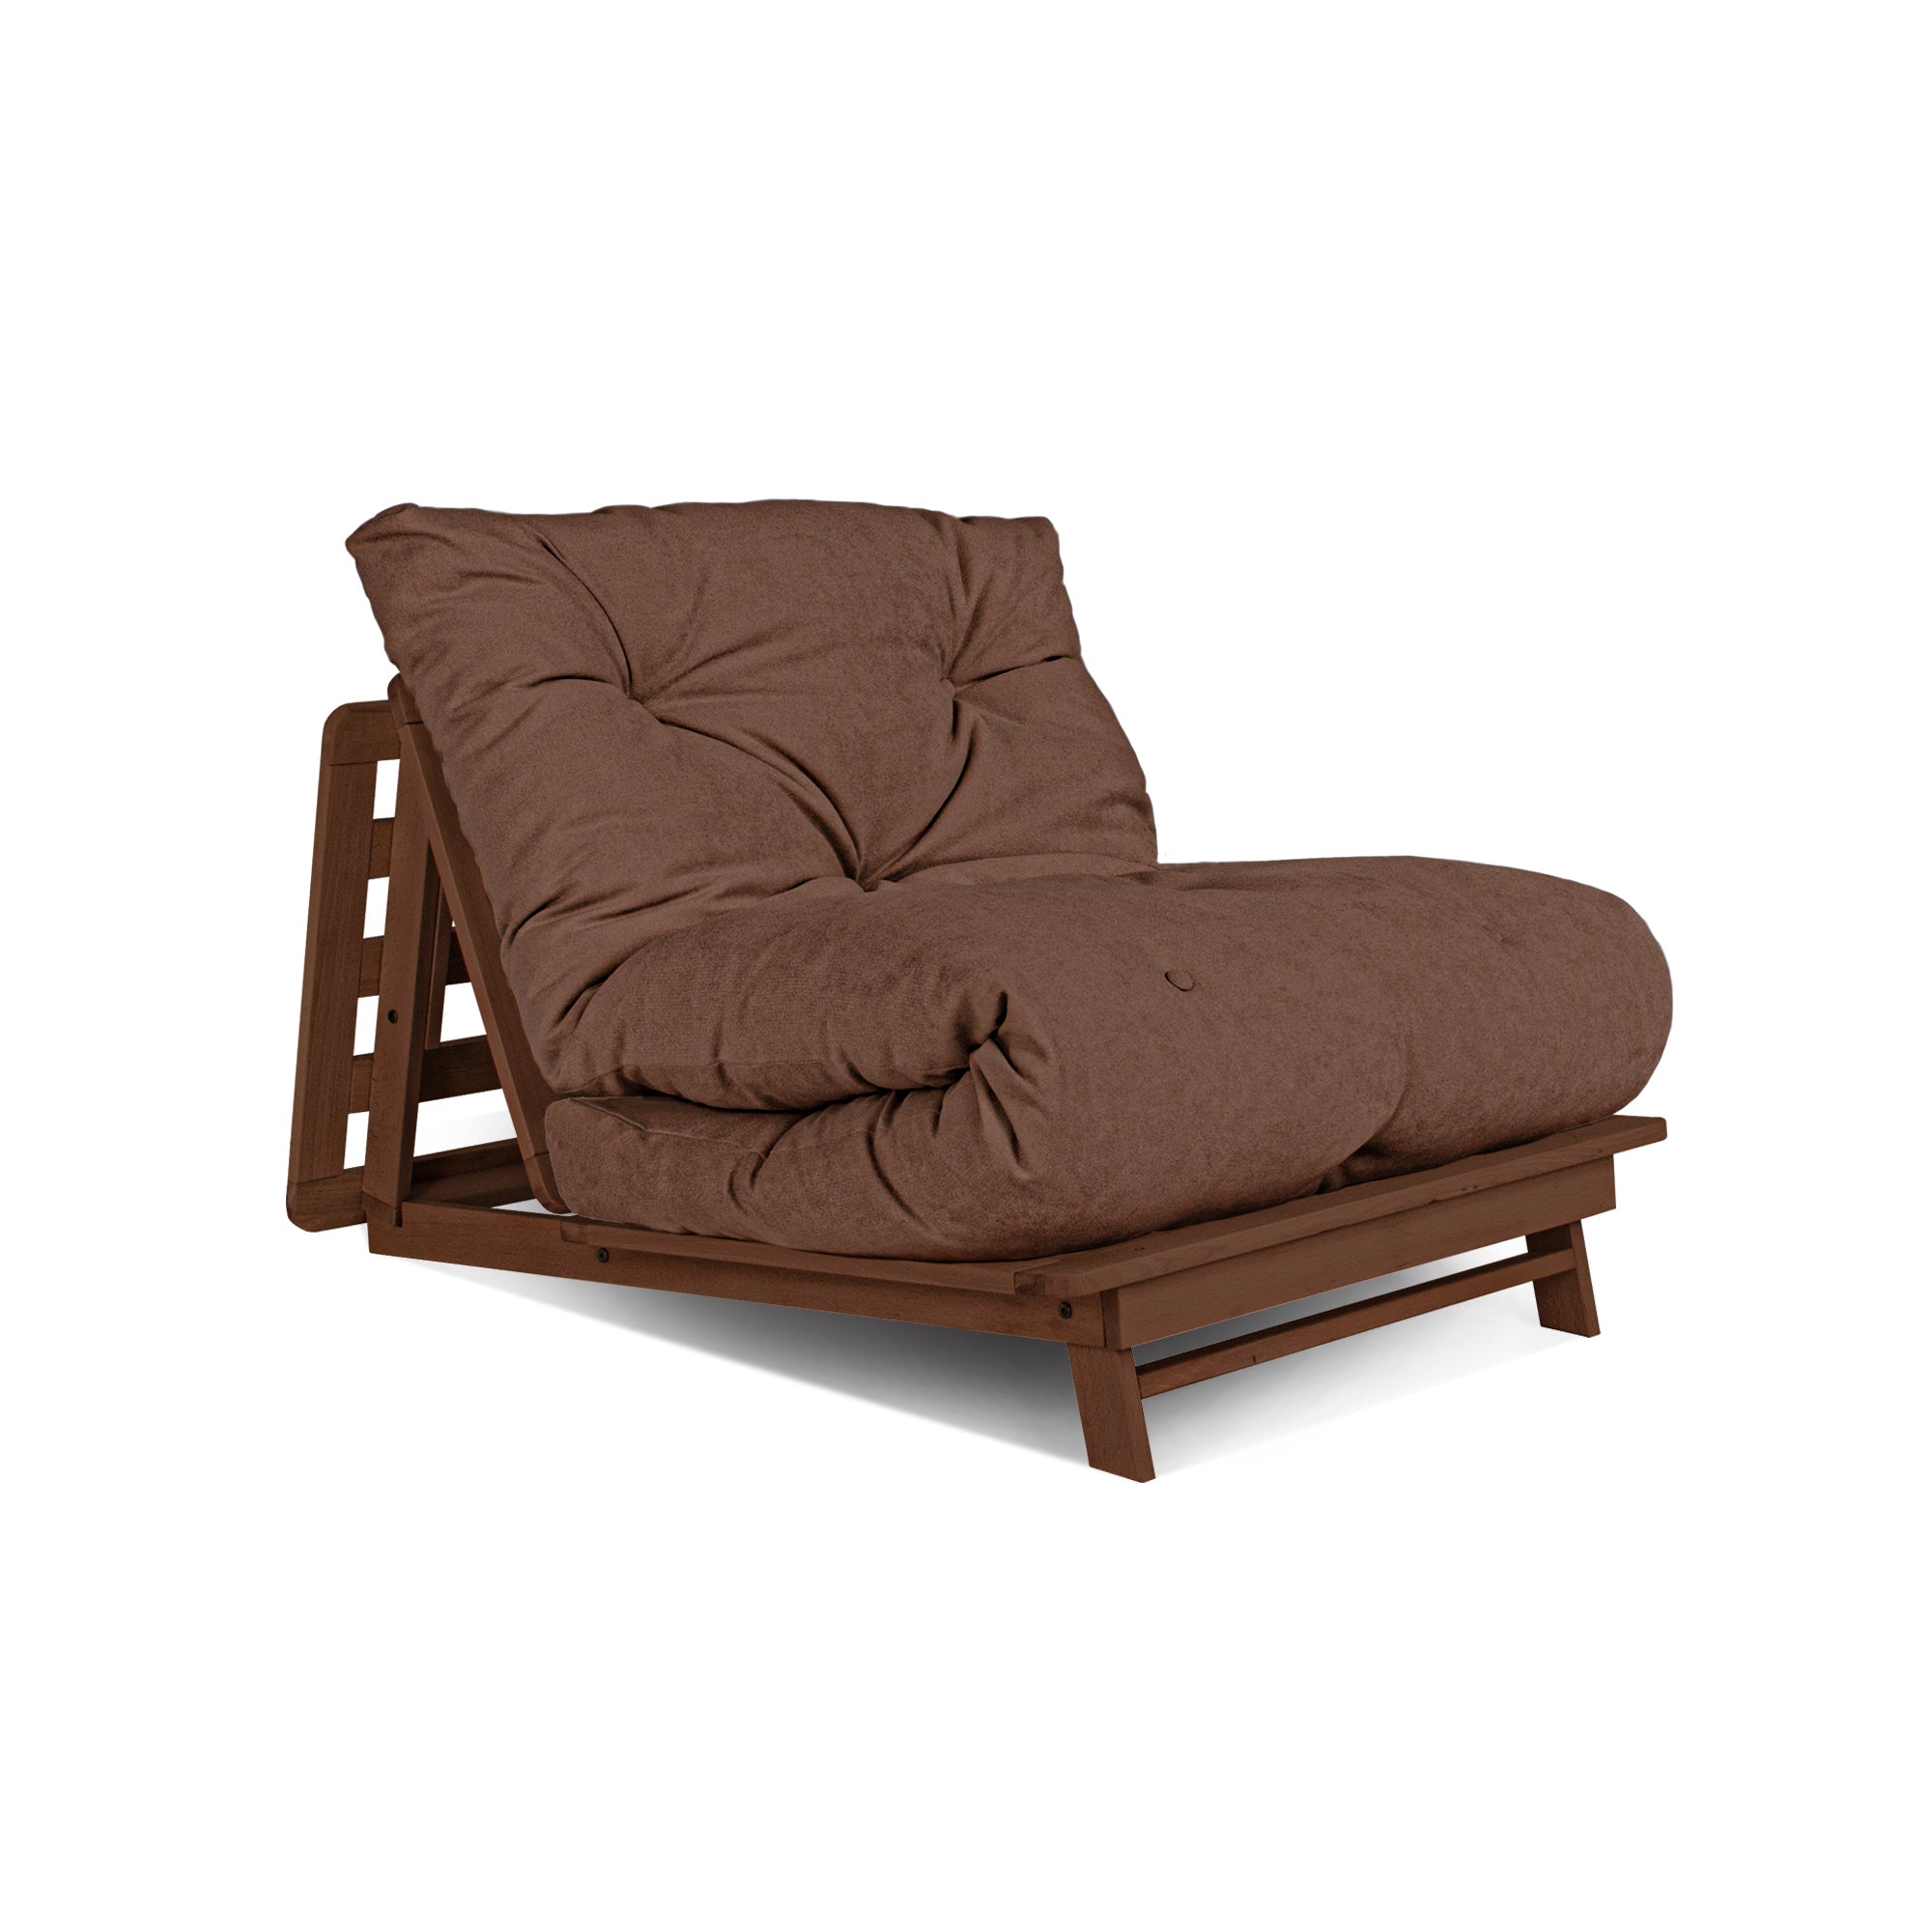 LAYTI-90 Futon Chair-walnut frame-brown fabric